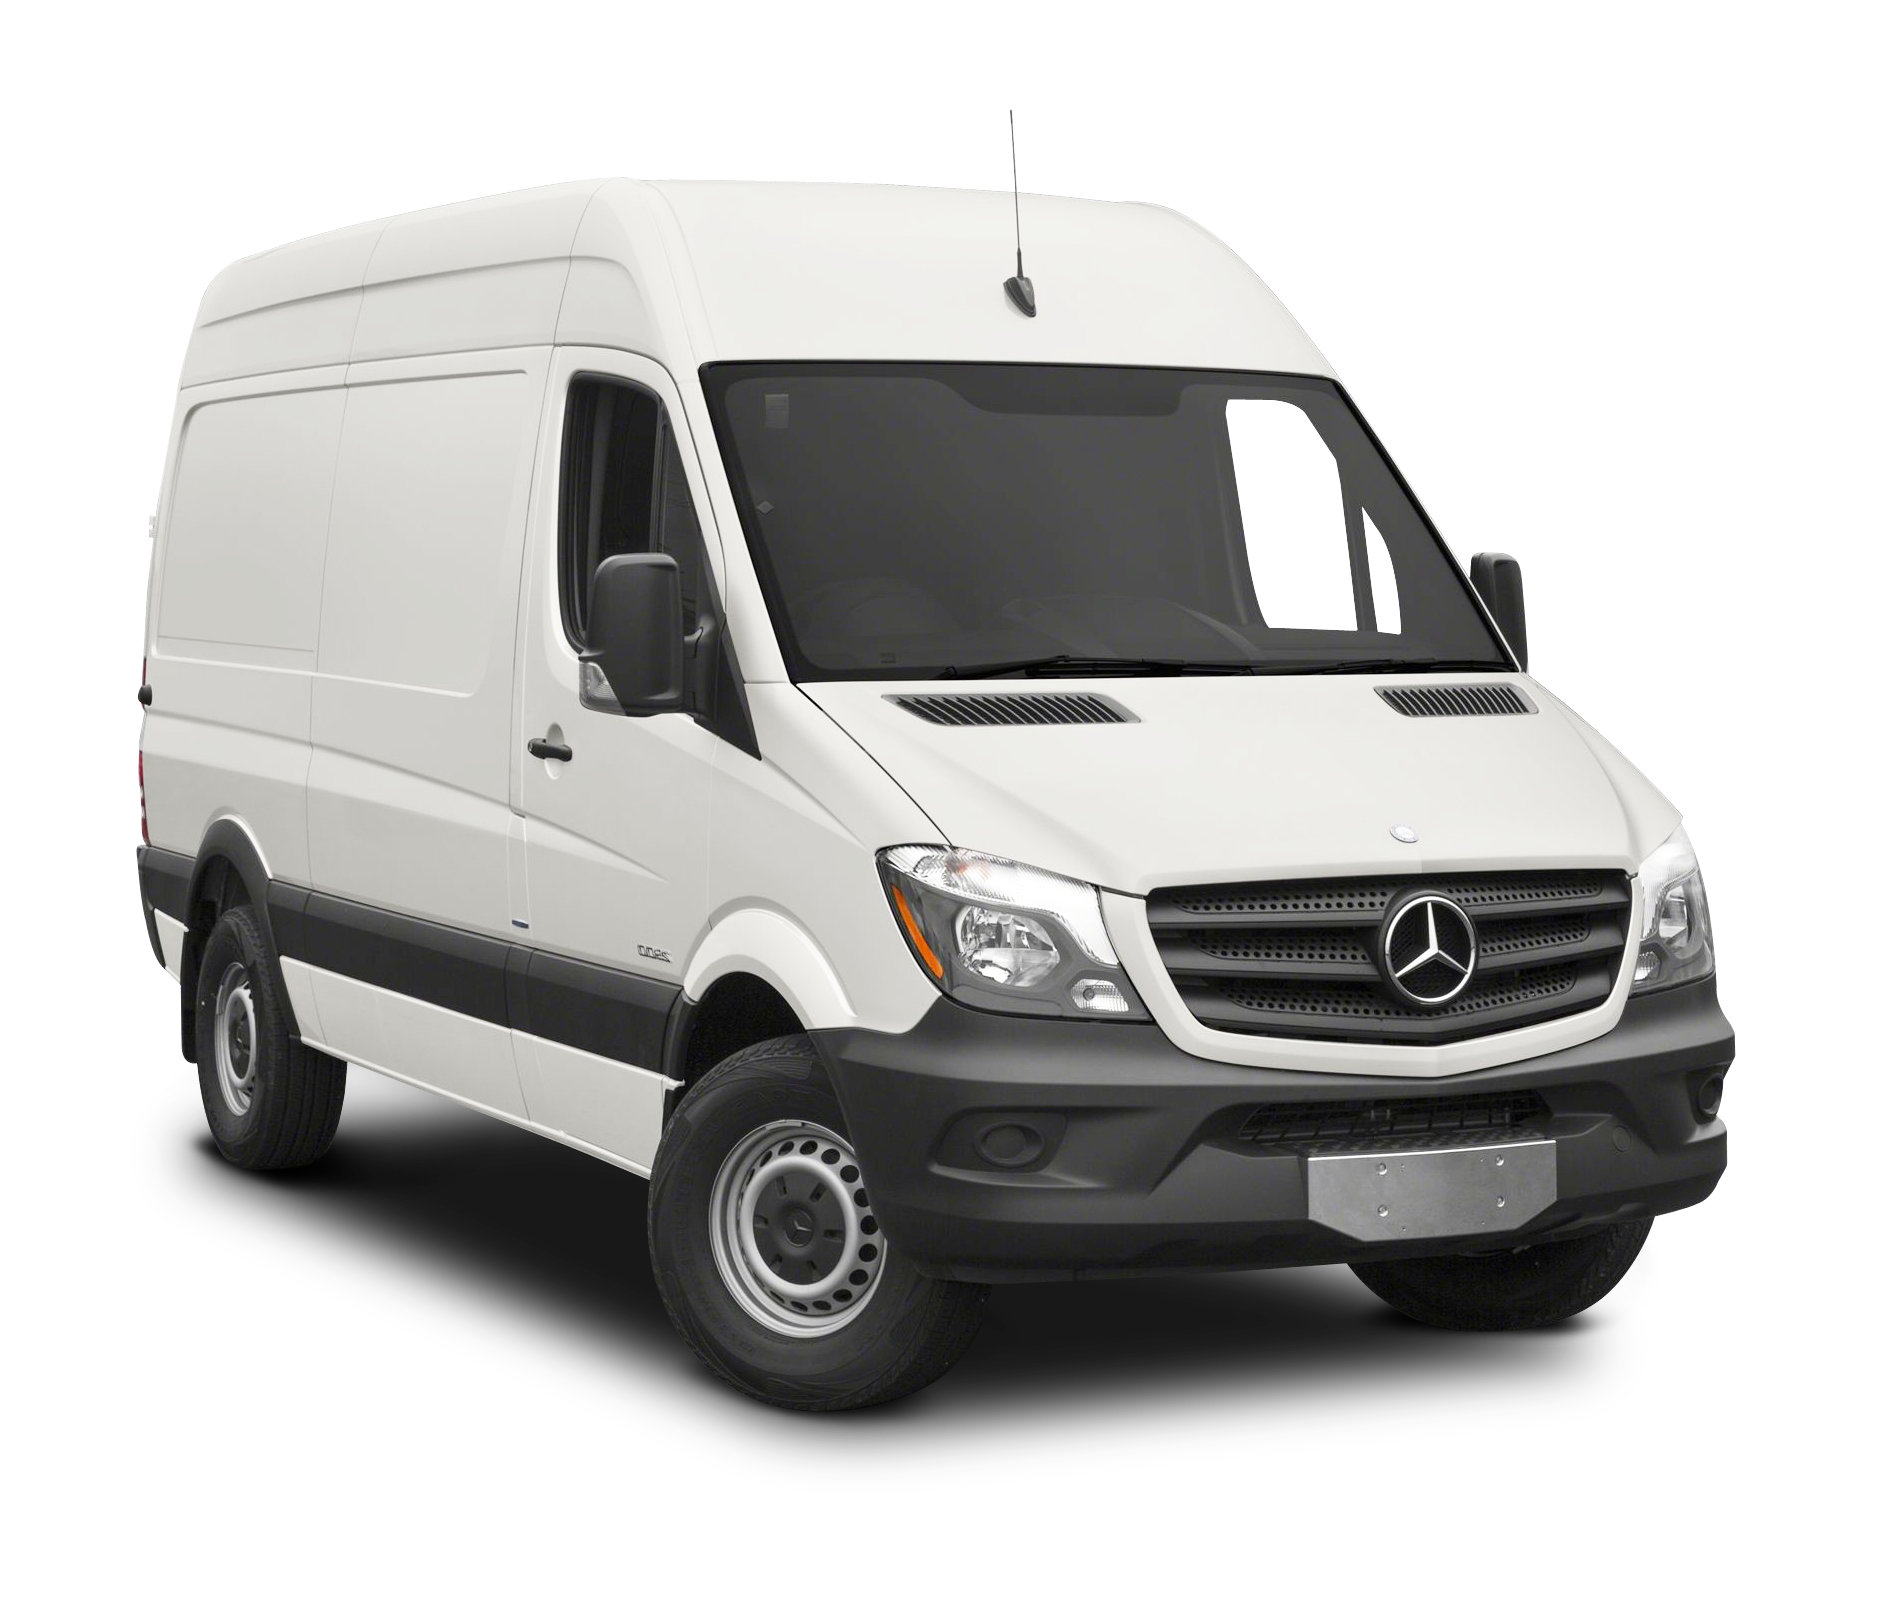 Car insurance for Ford Transit 250 Cargo Van